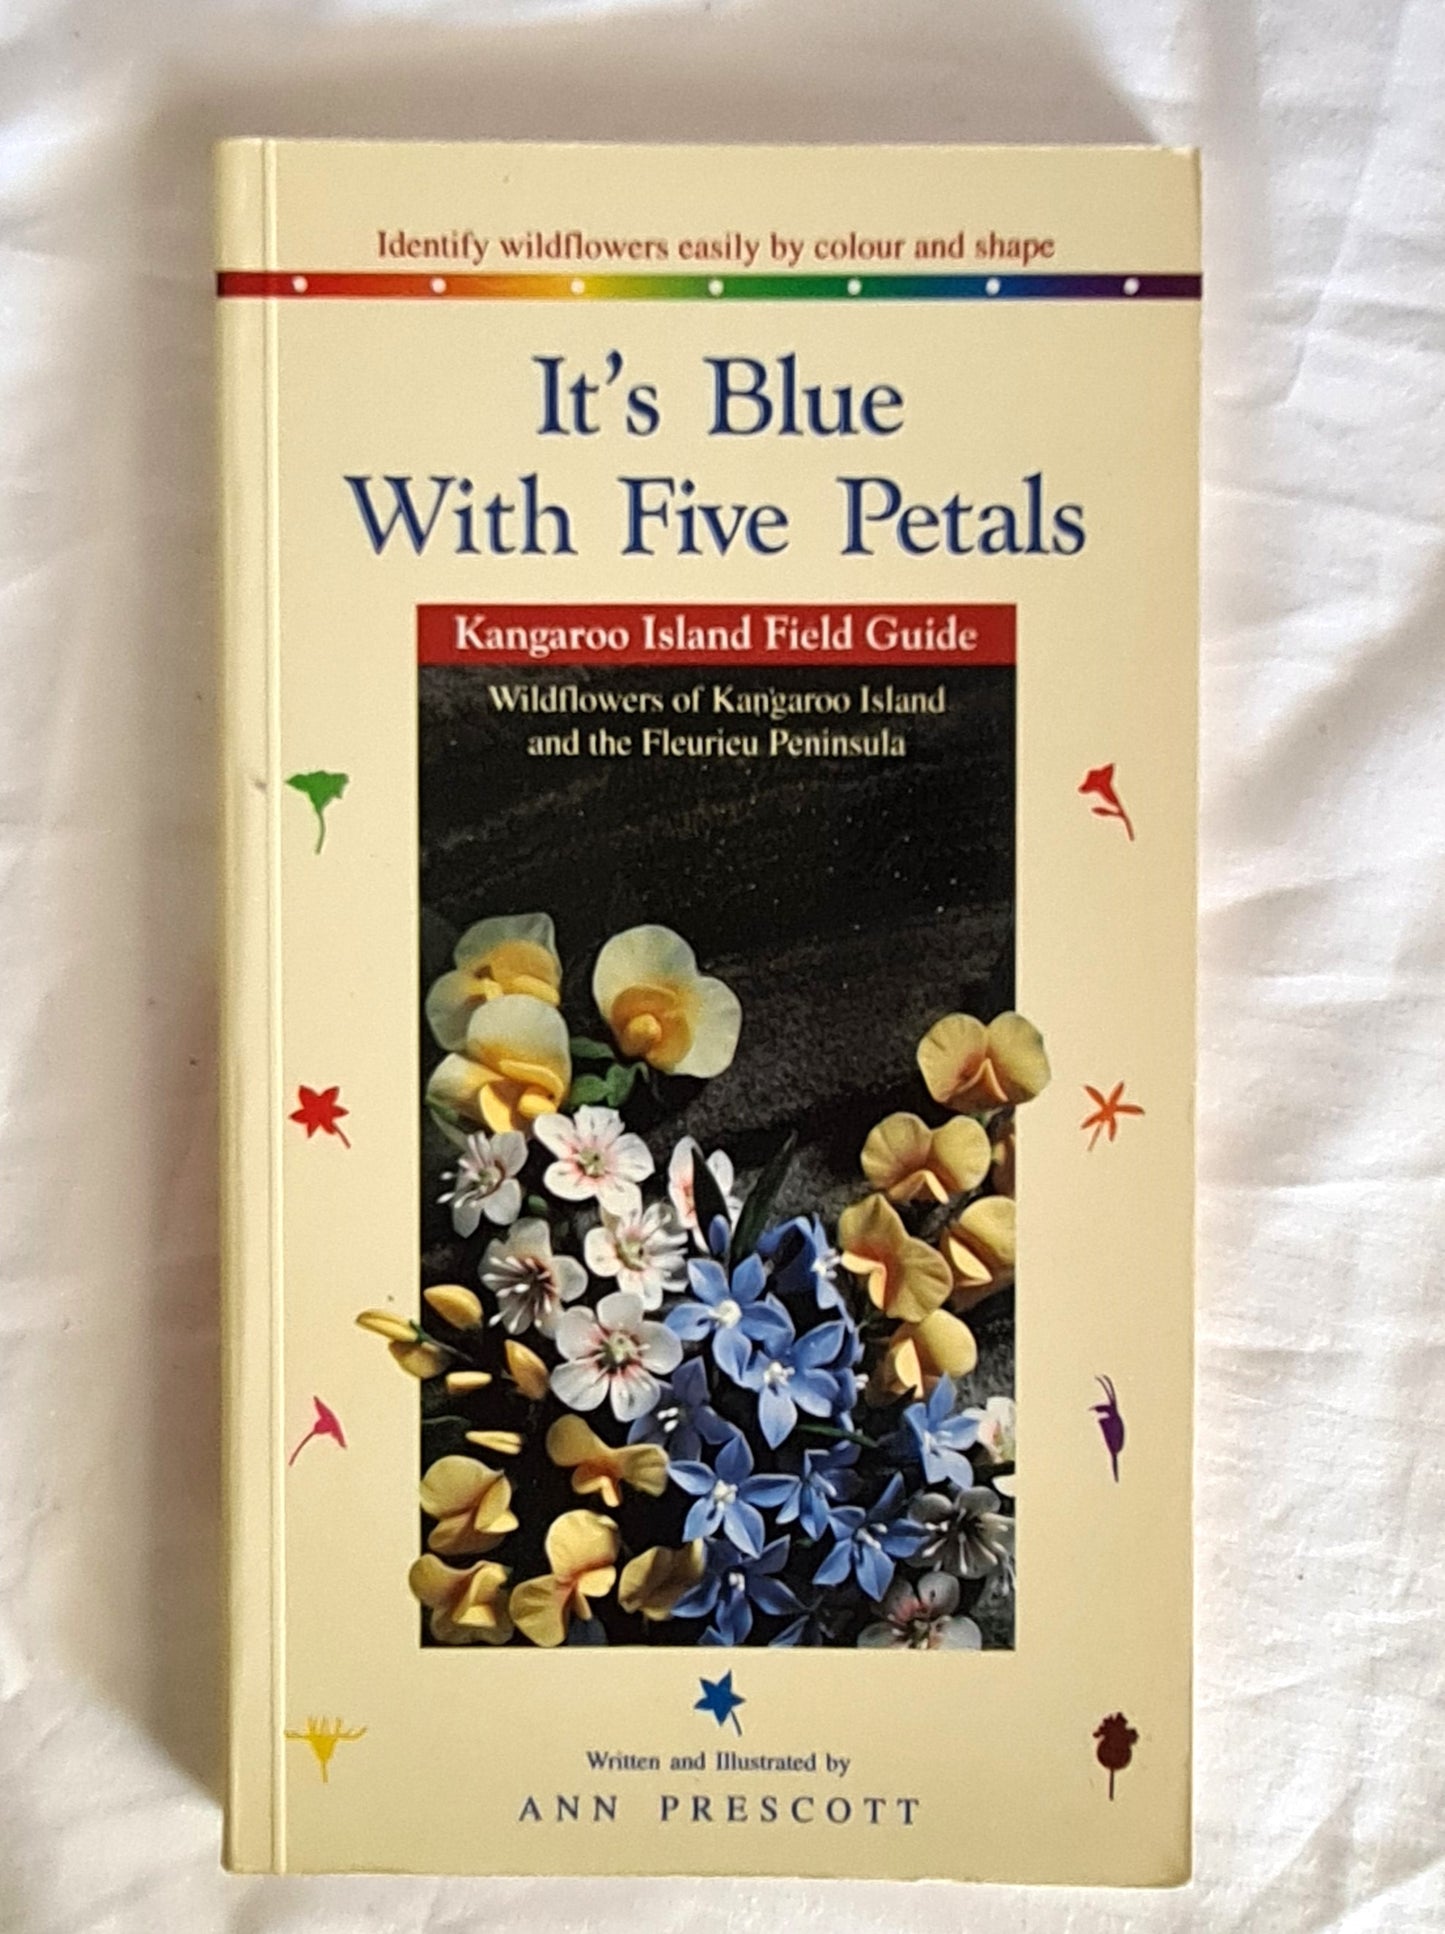 It’s Blue With Five Petals  Kangaroo Island Field Guide  Wildflowers of Kangaroo Island and the Fleurieu Peninsula  by Ann Prescott